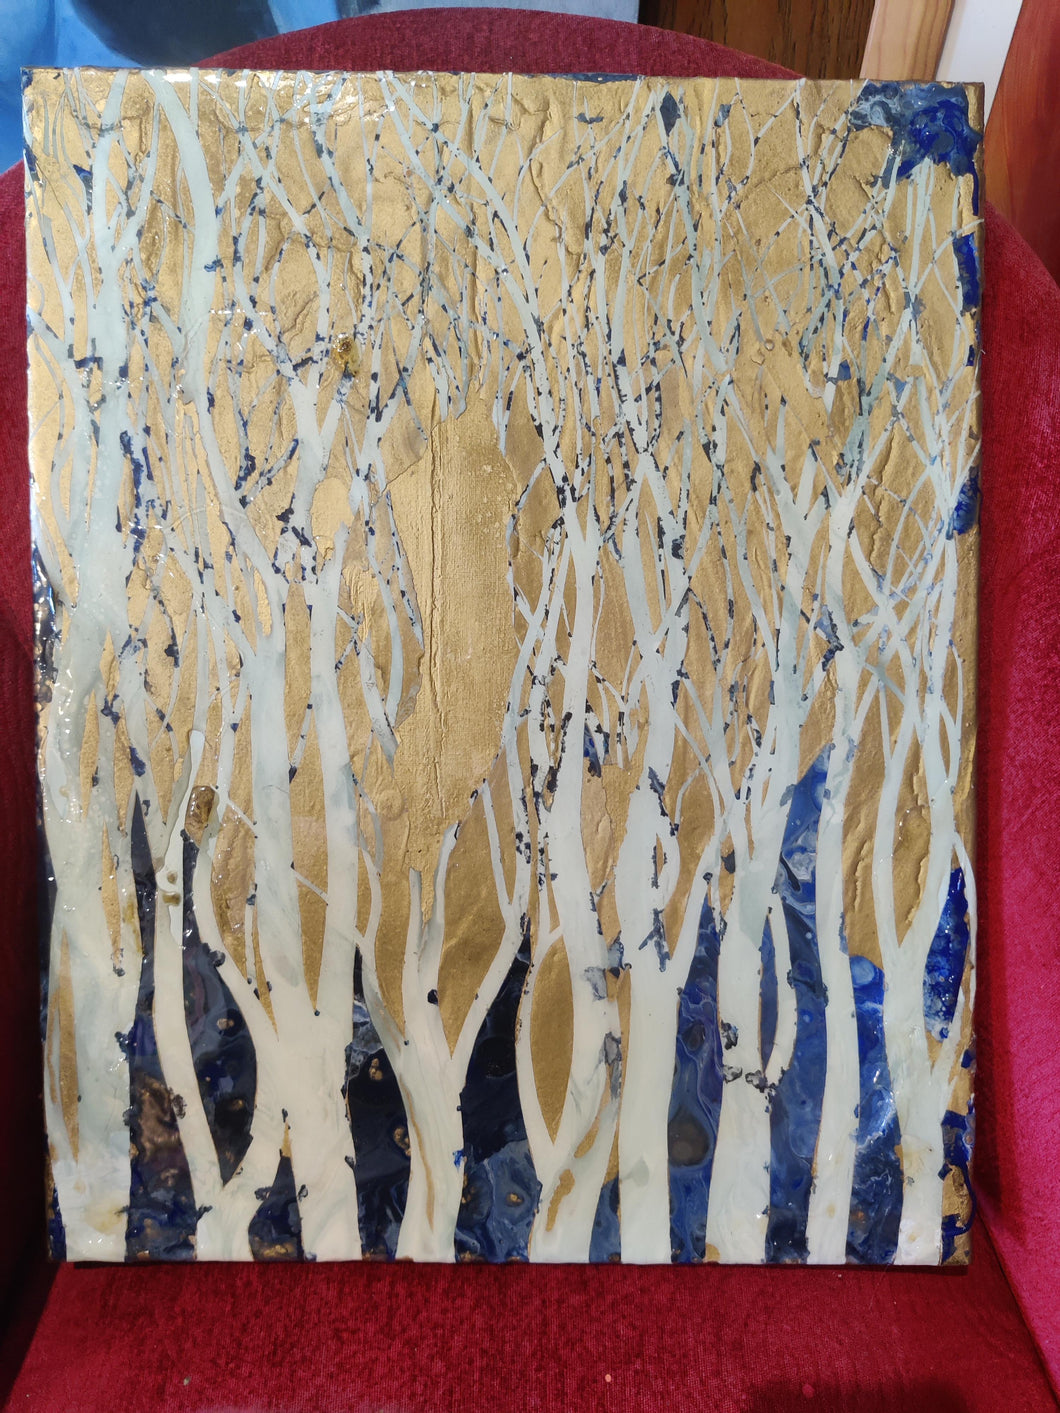 (Gold + Blue + White Tree Branches) by Sarah Larsen